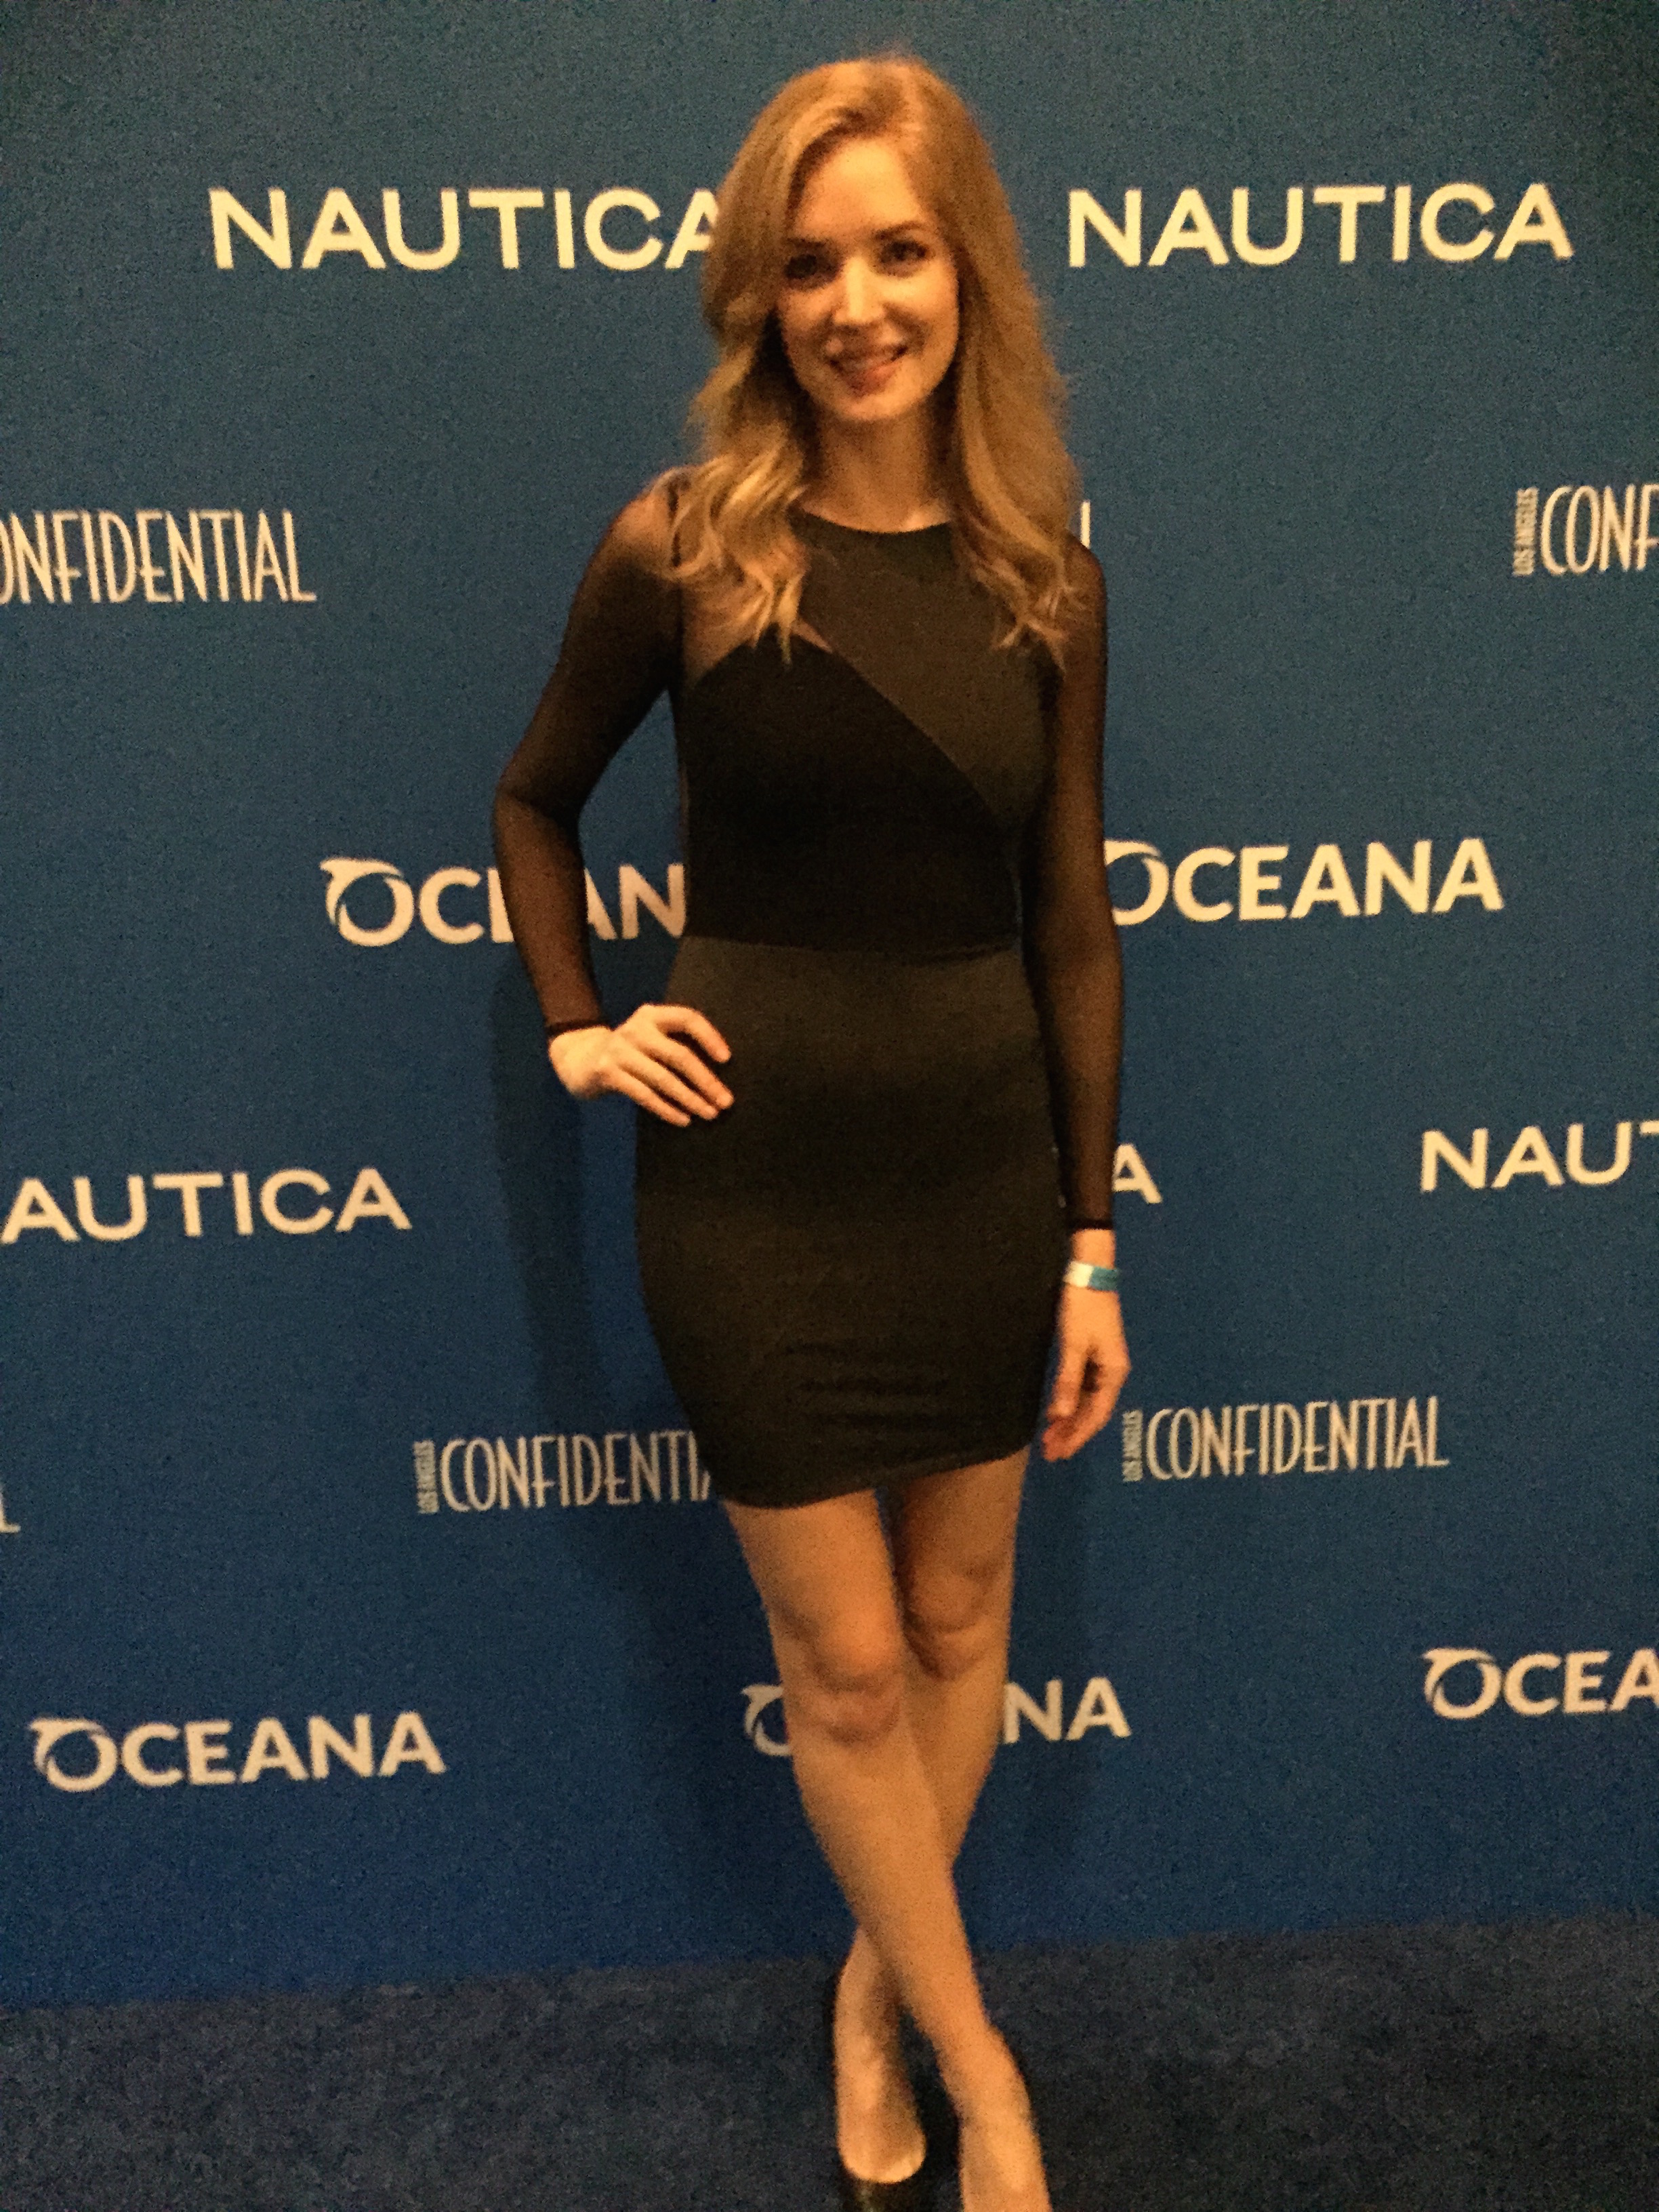 OCEANA/NAUTICA Charity event, 2015